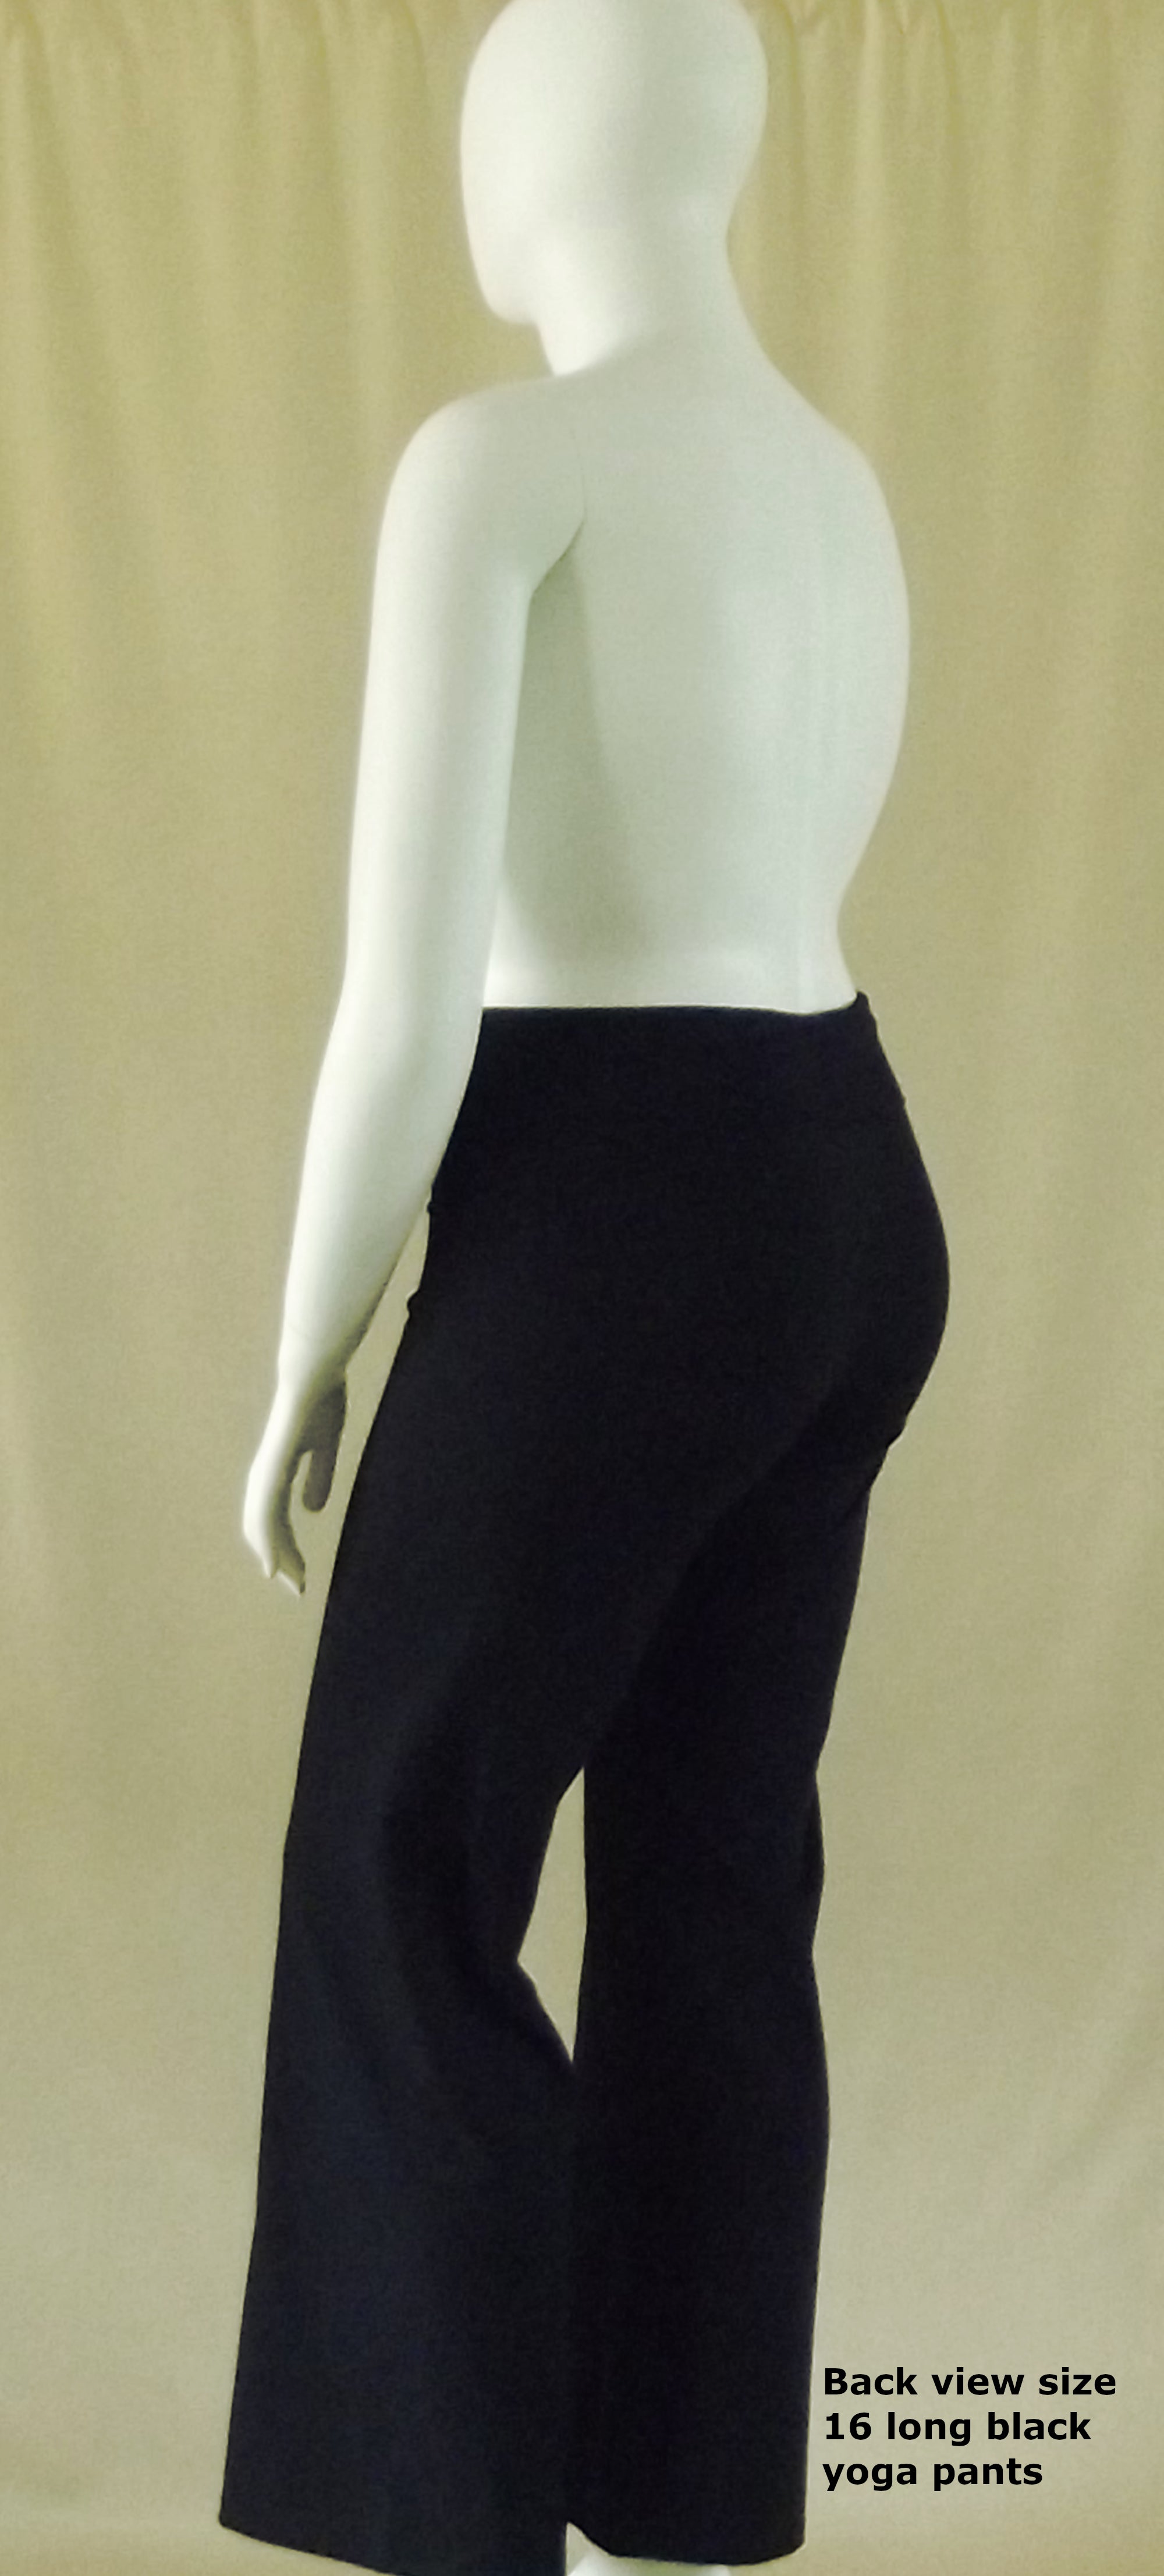 back view of plus size model wearing black cotton spandex long yoga pants